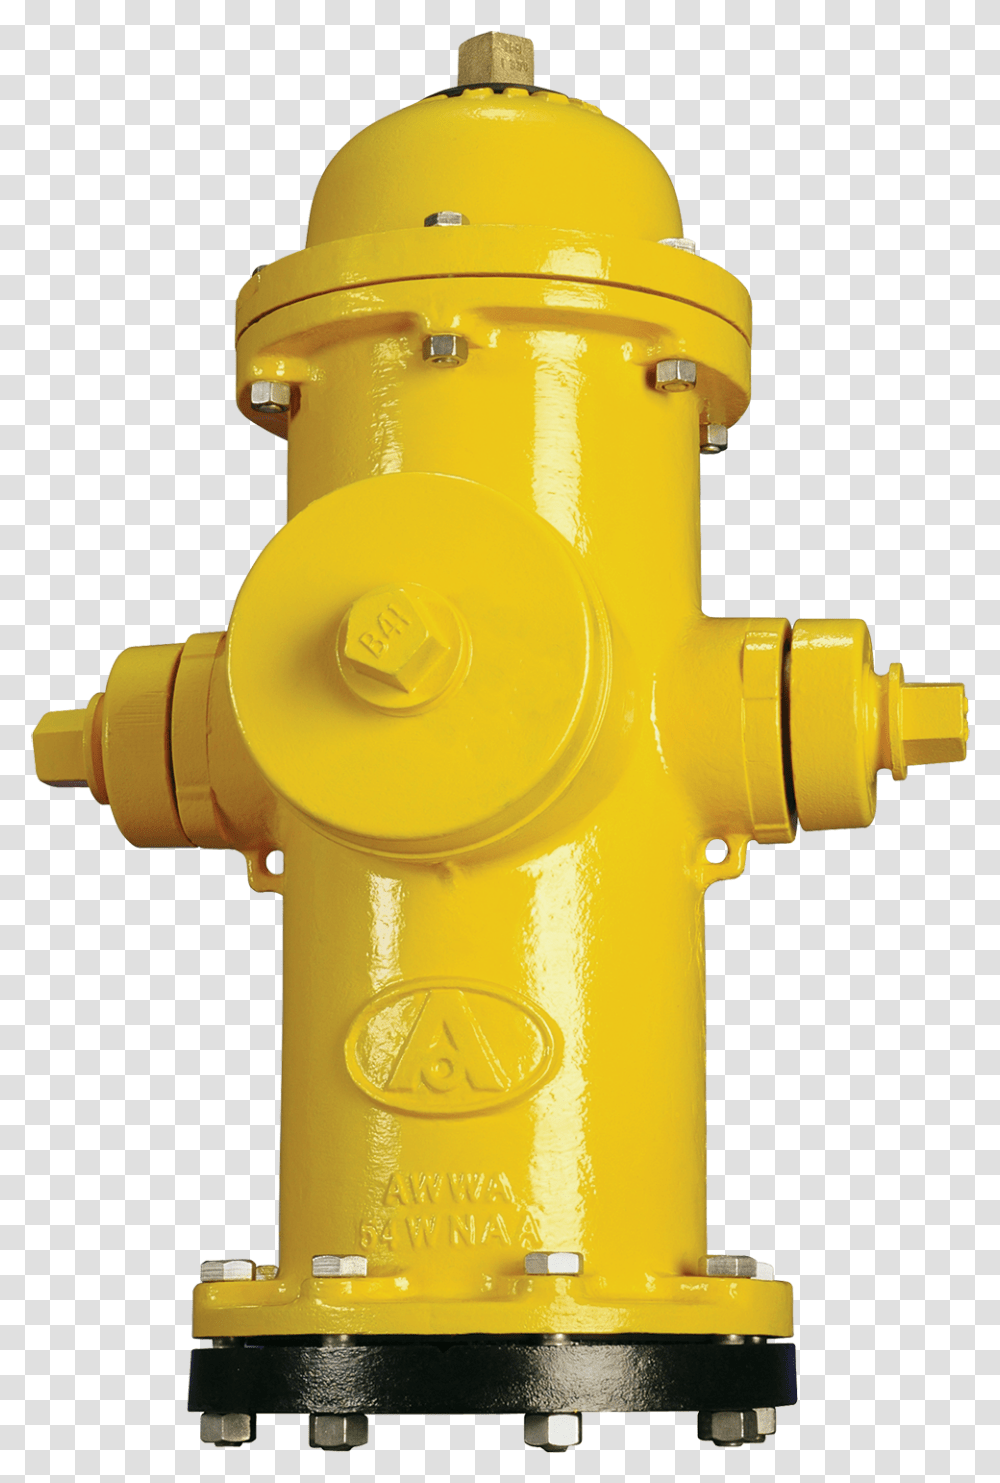 14 American Darling B 62 B American Darling Fire Hydrant Transparent Png